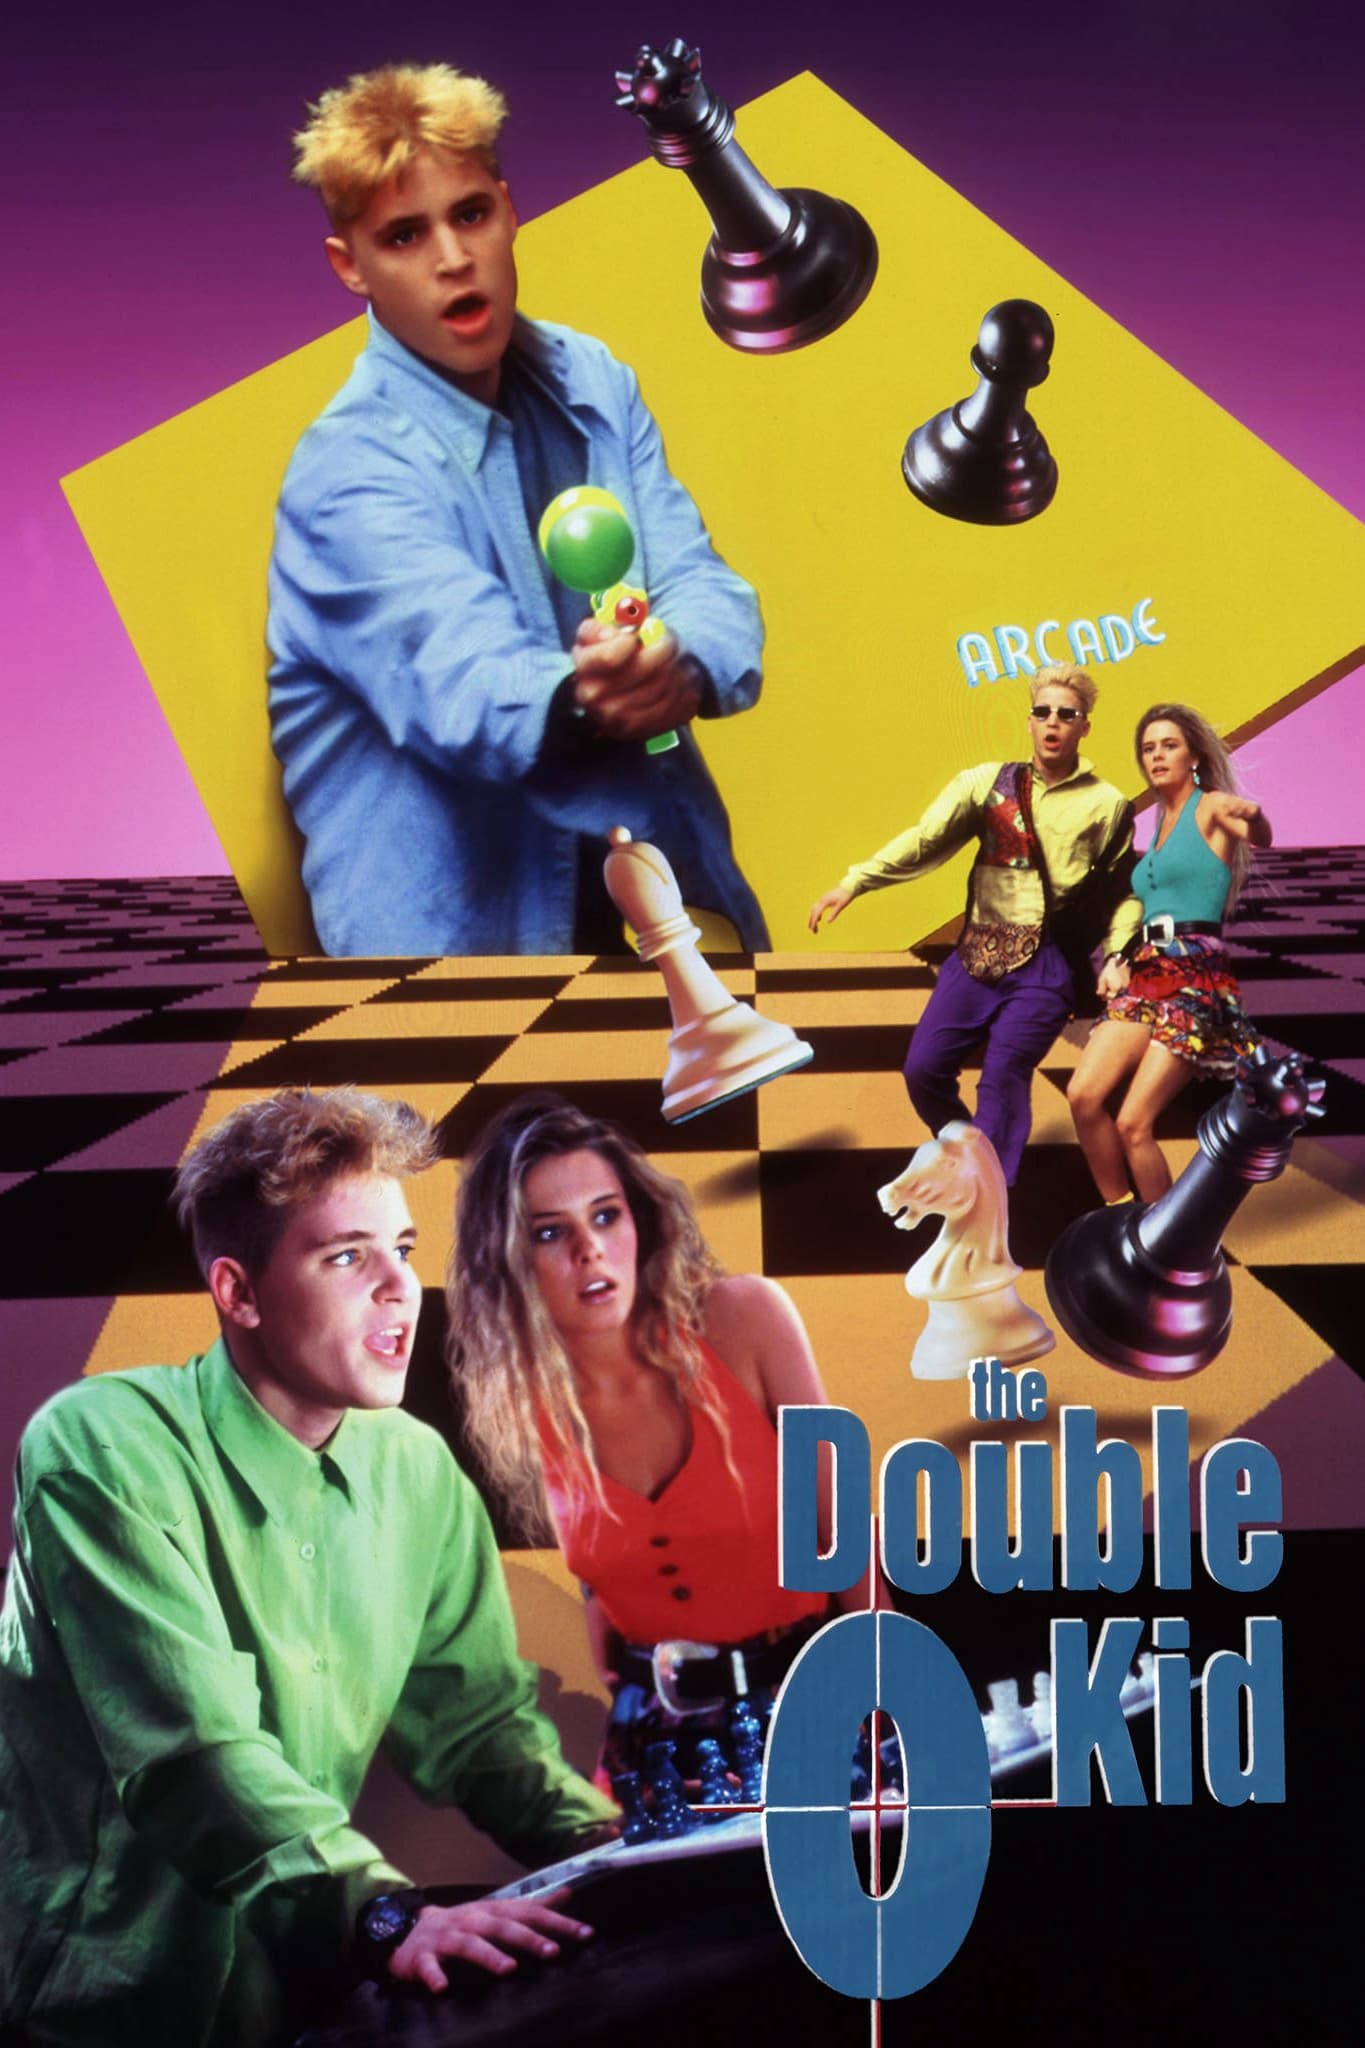 The Double 0 Kid (1992)